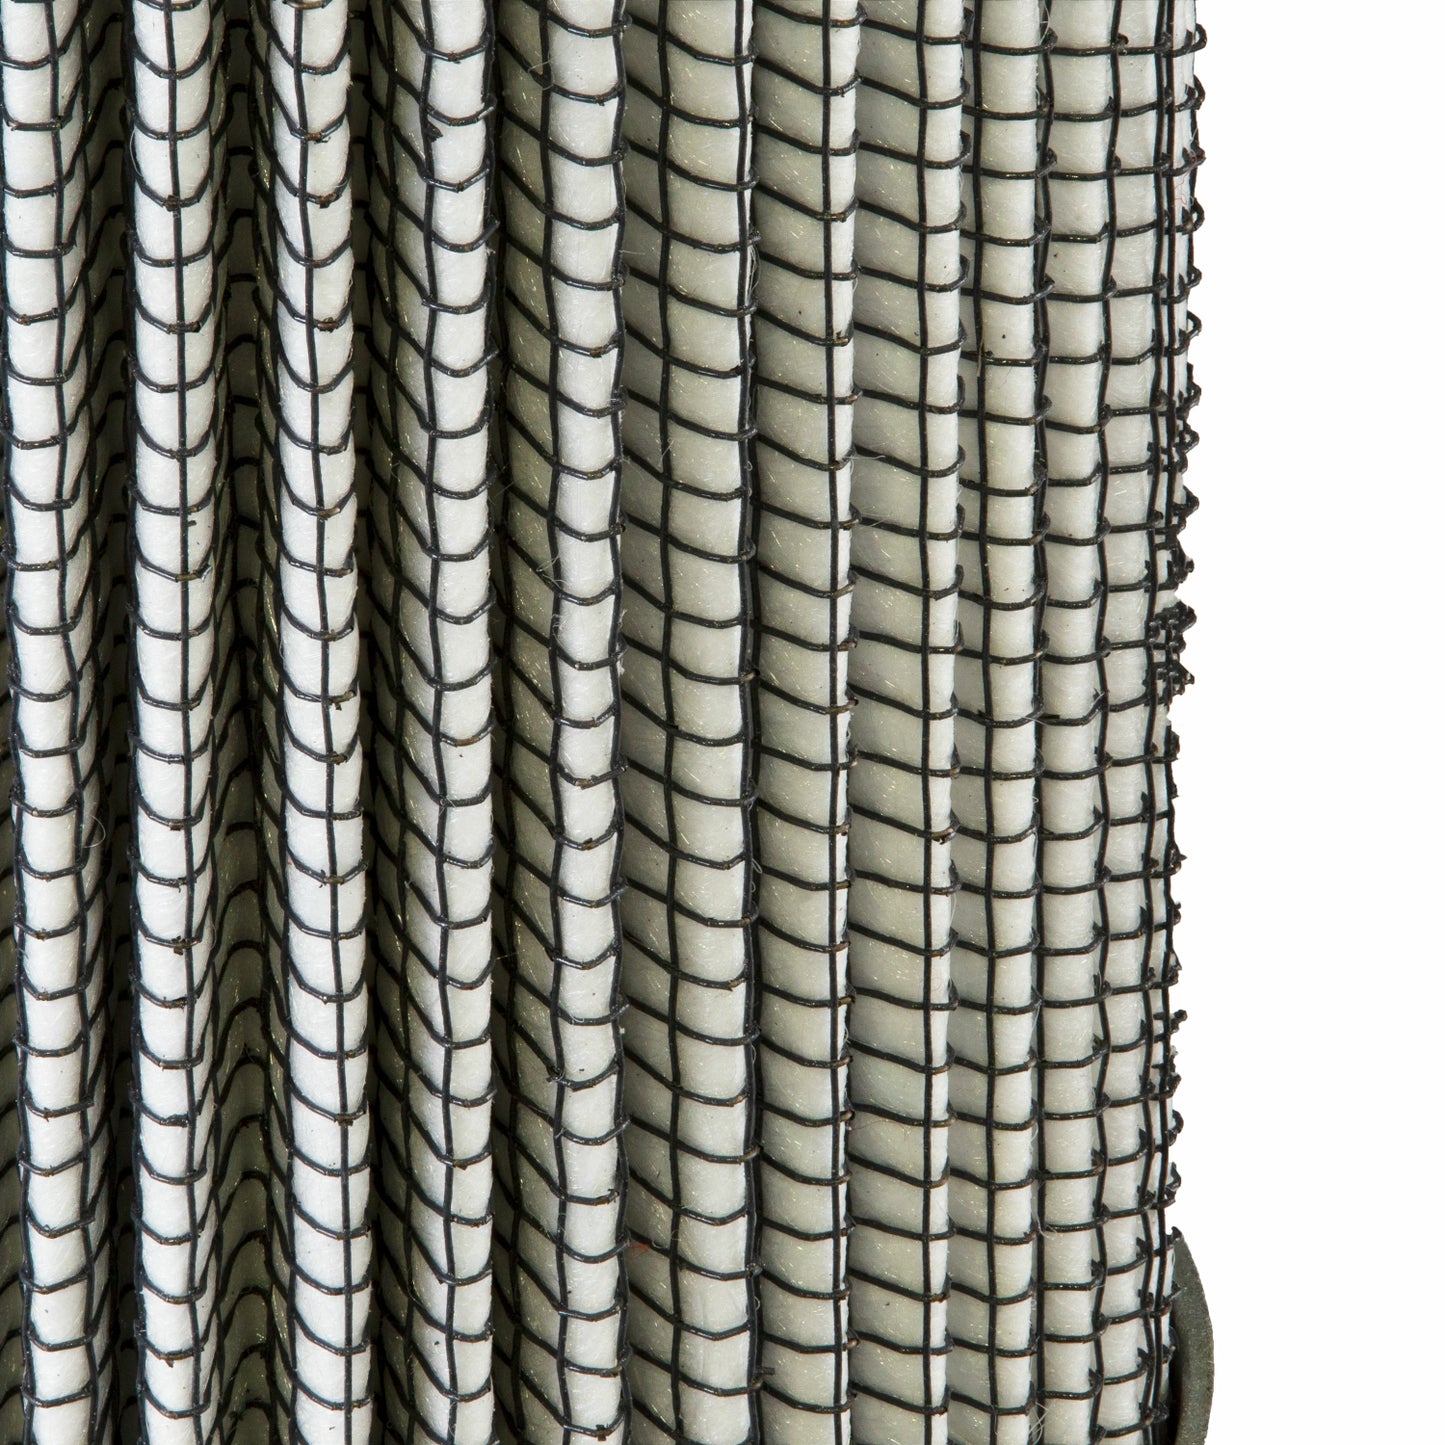 Cartridge Filter Element SF9020-8-1UMV 1 Micron Microglass